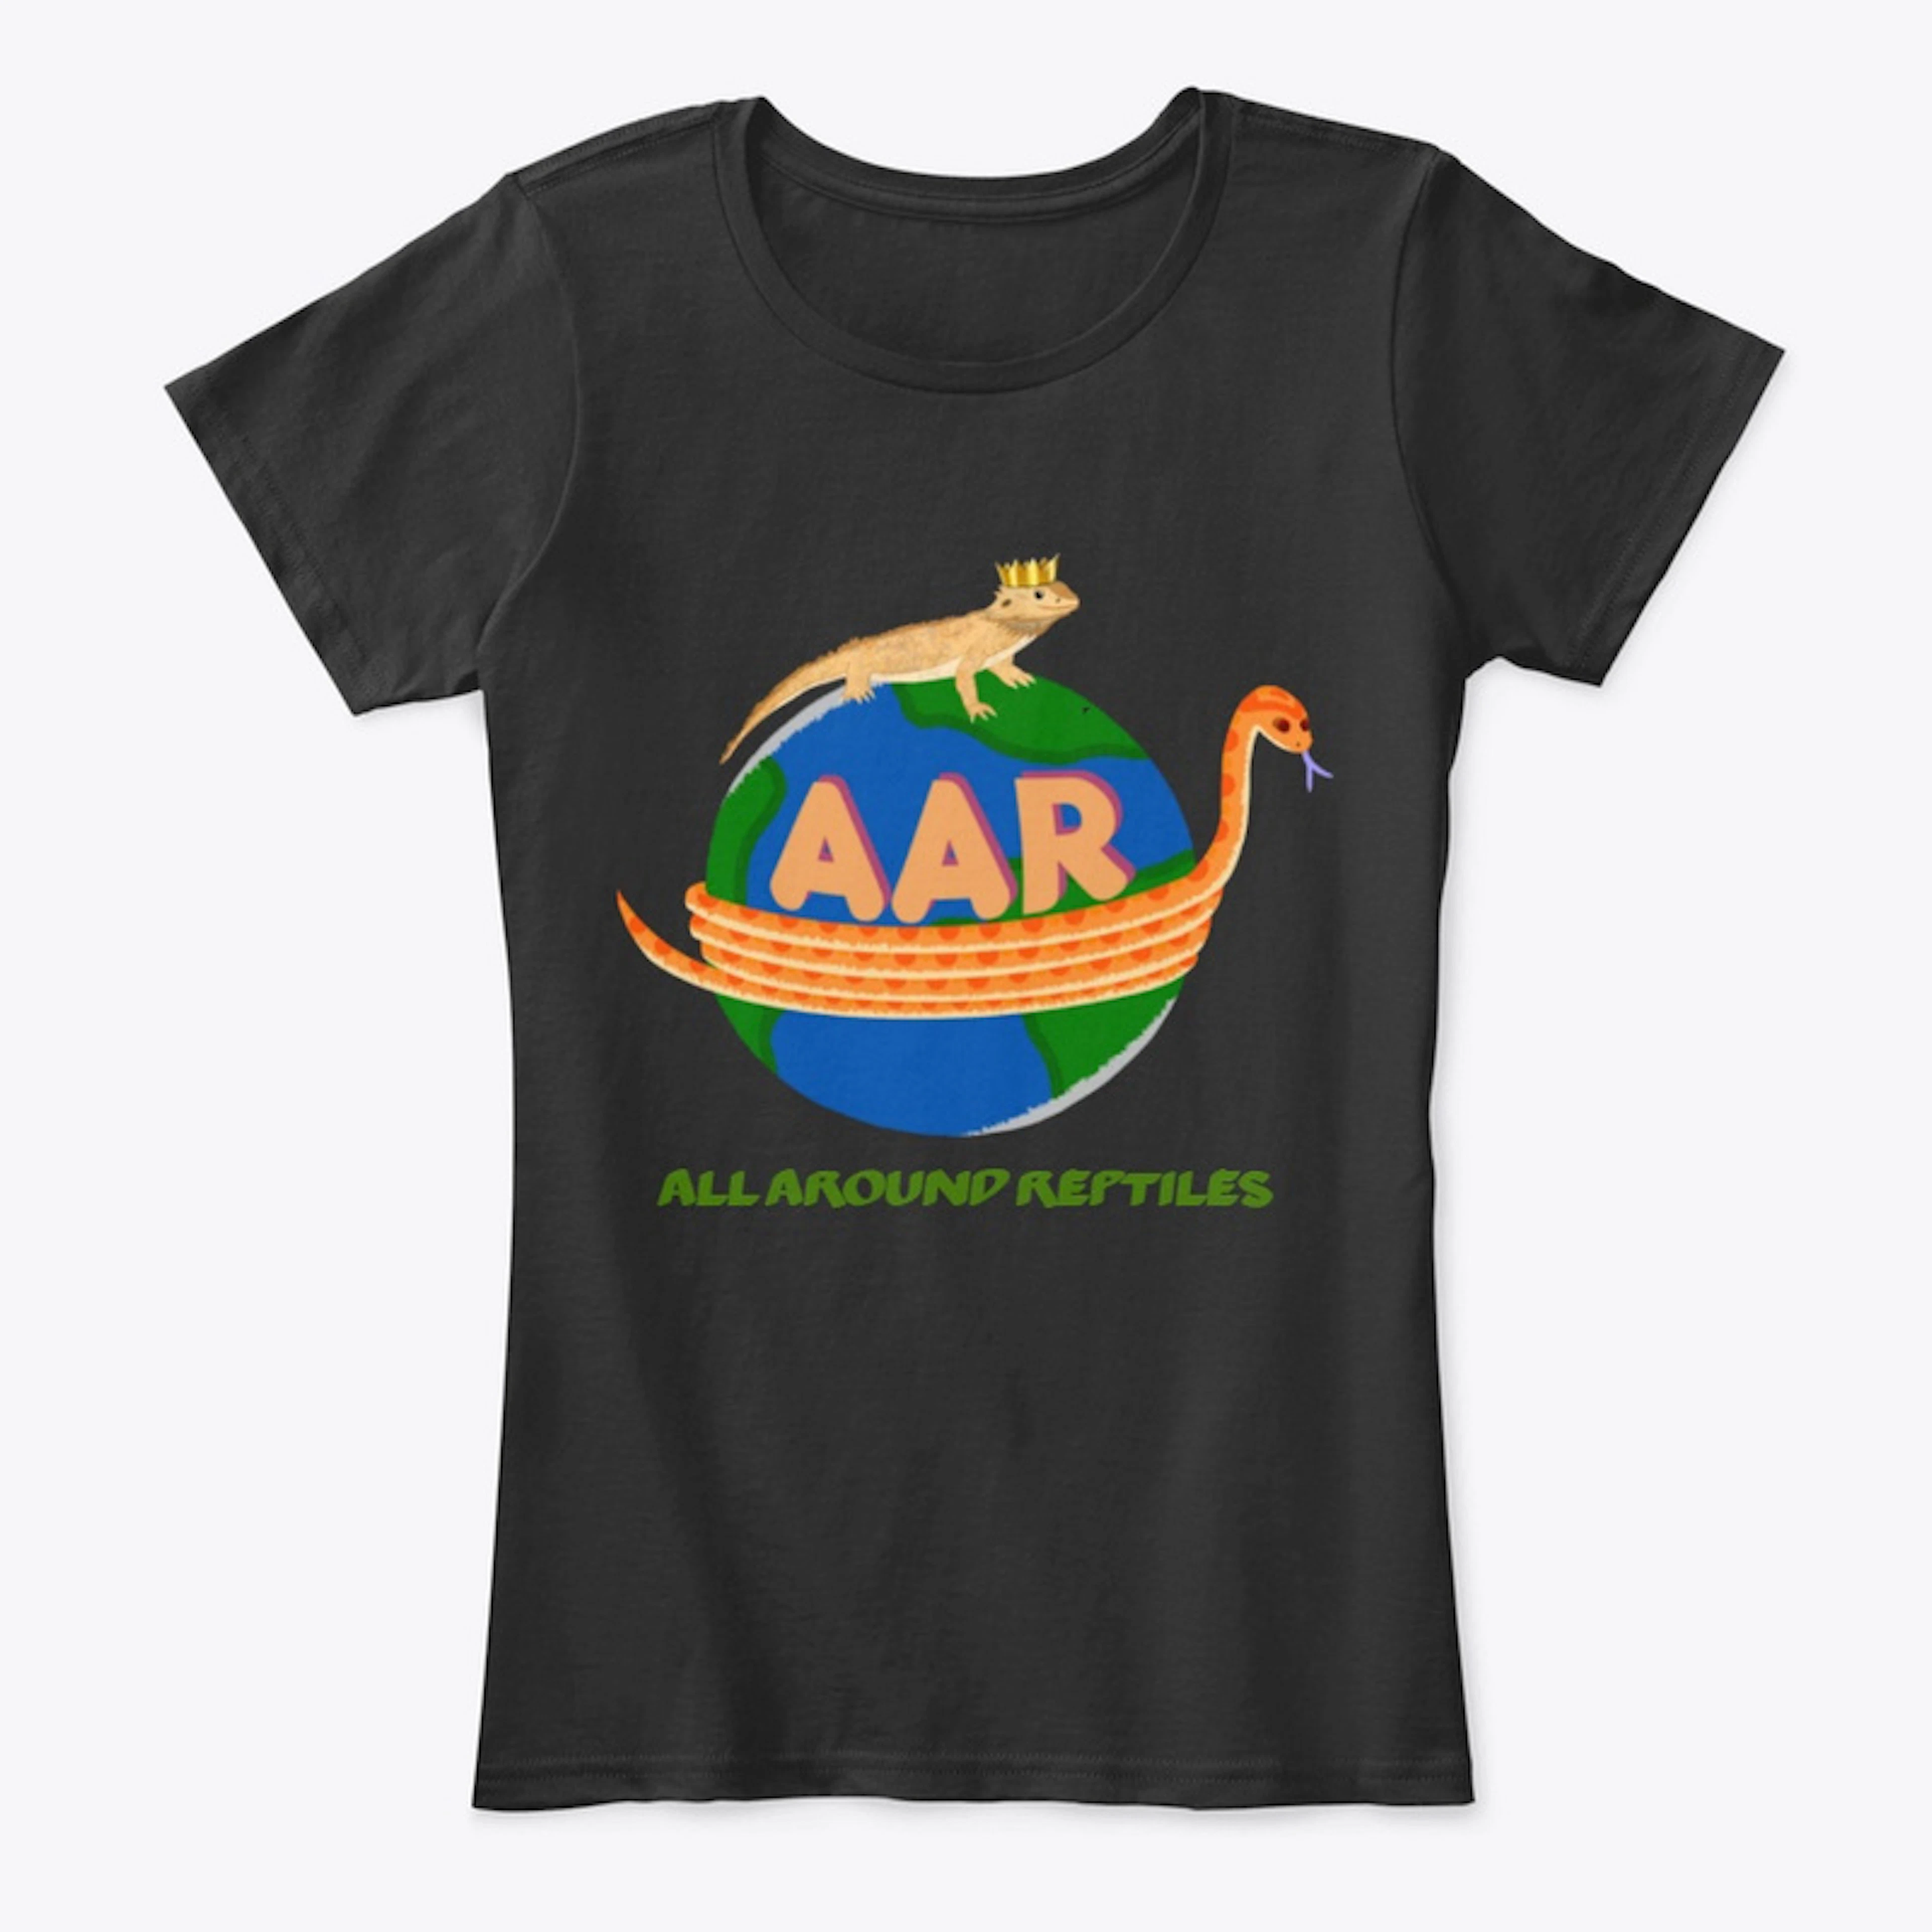  All Around Reptiles logo - Tee